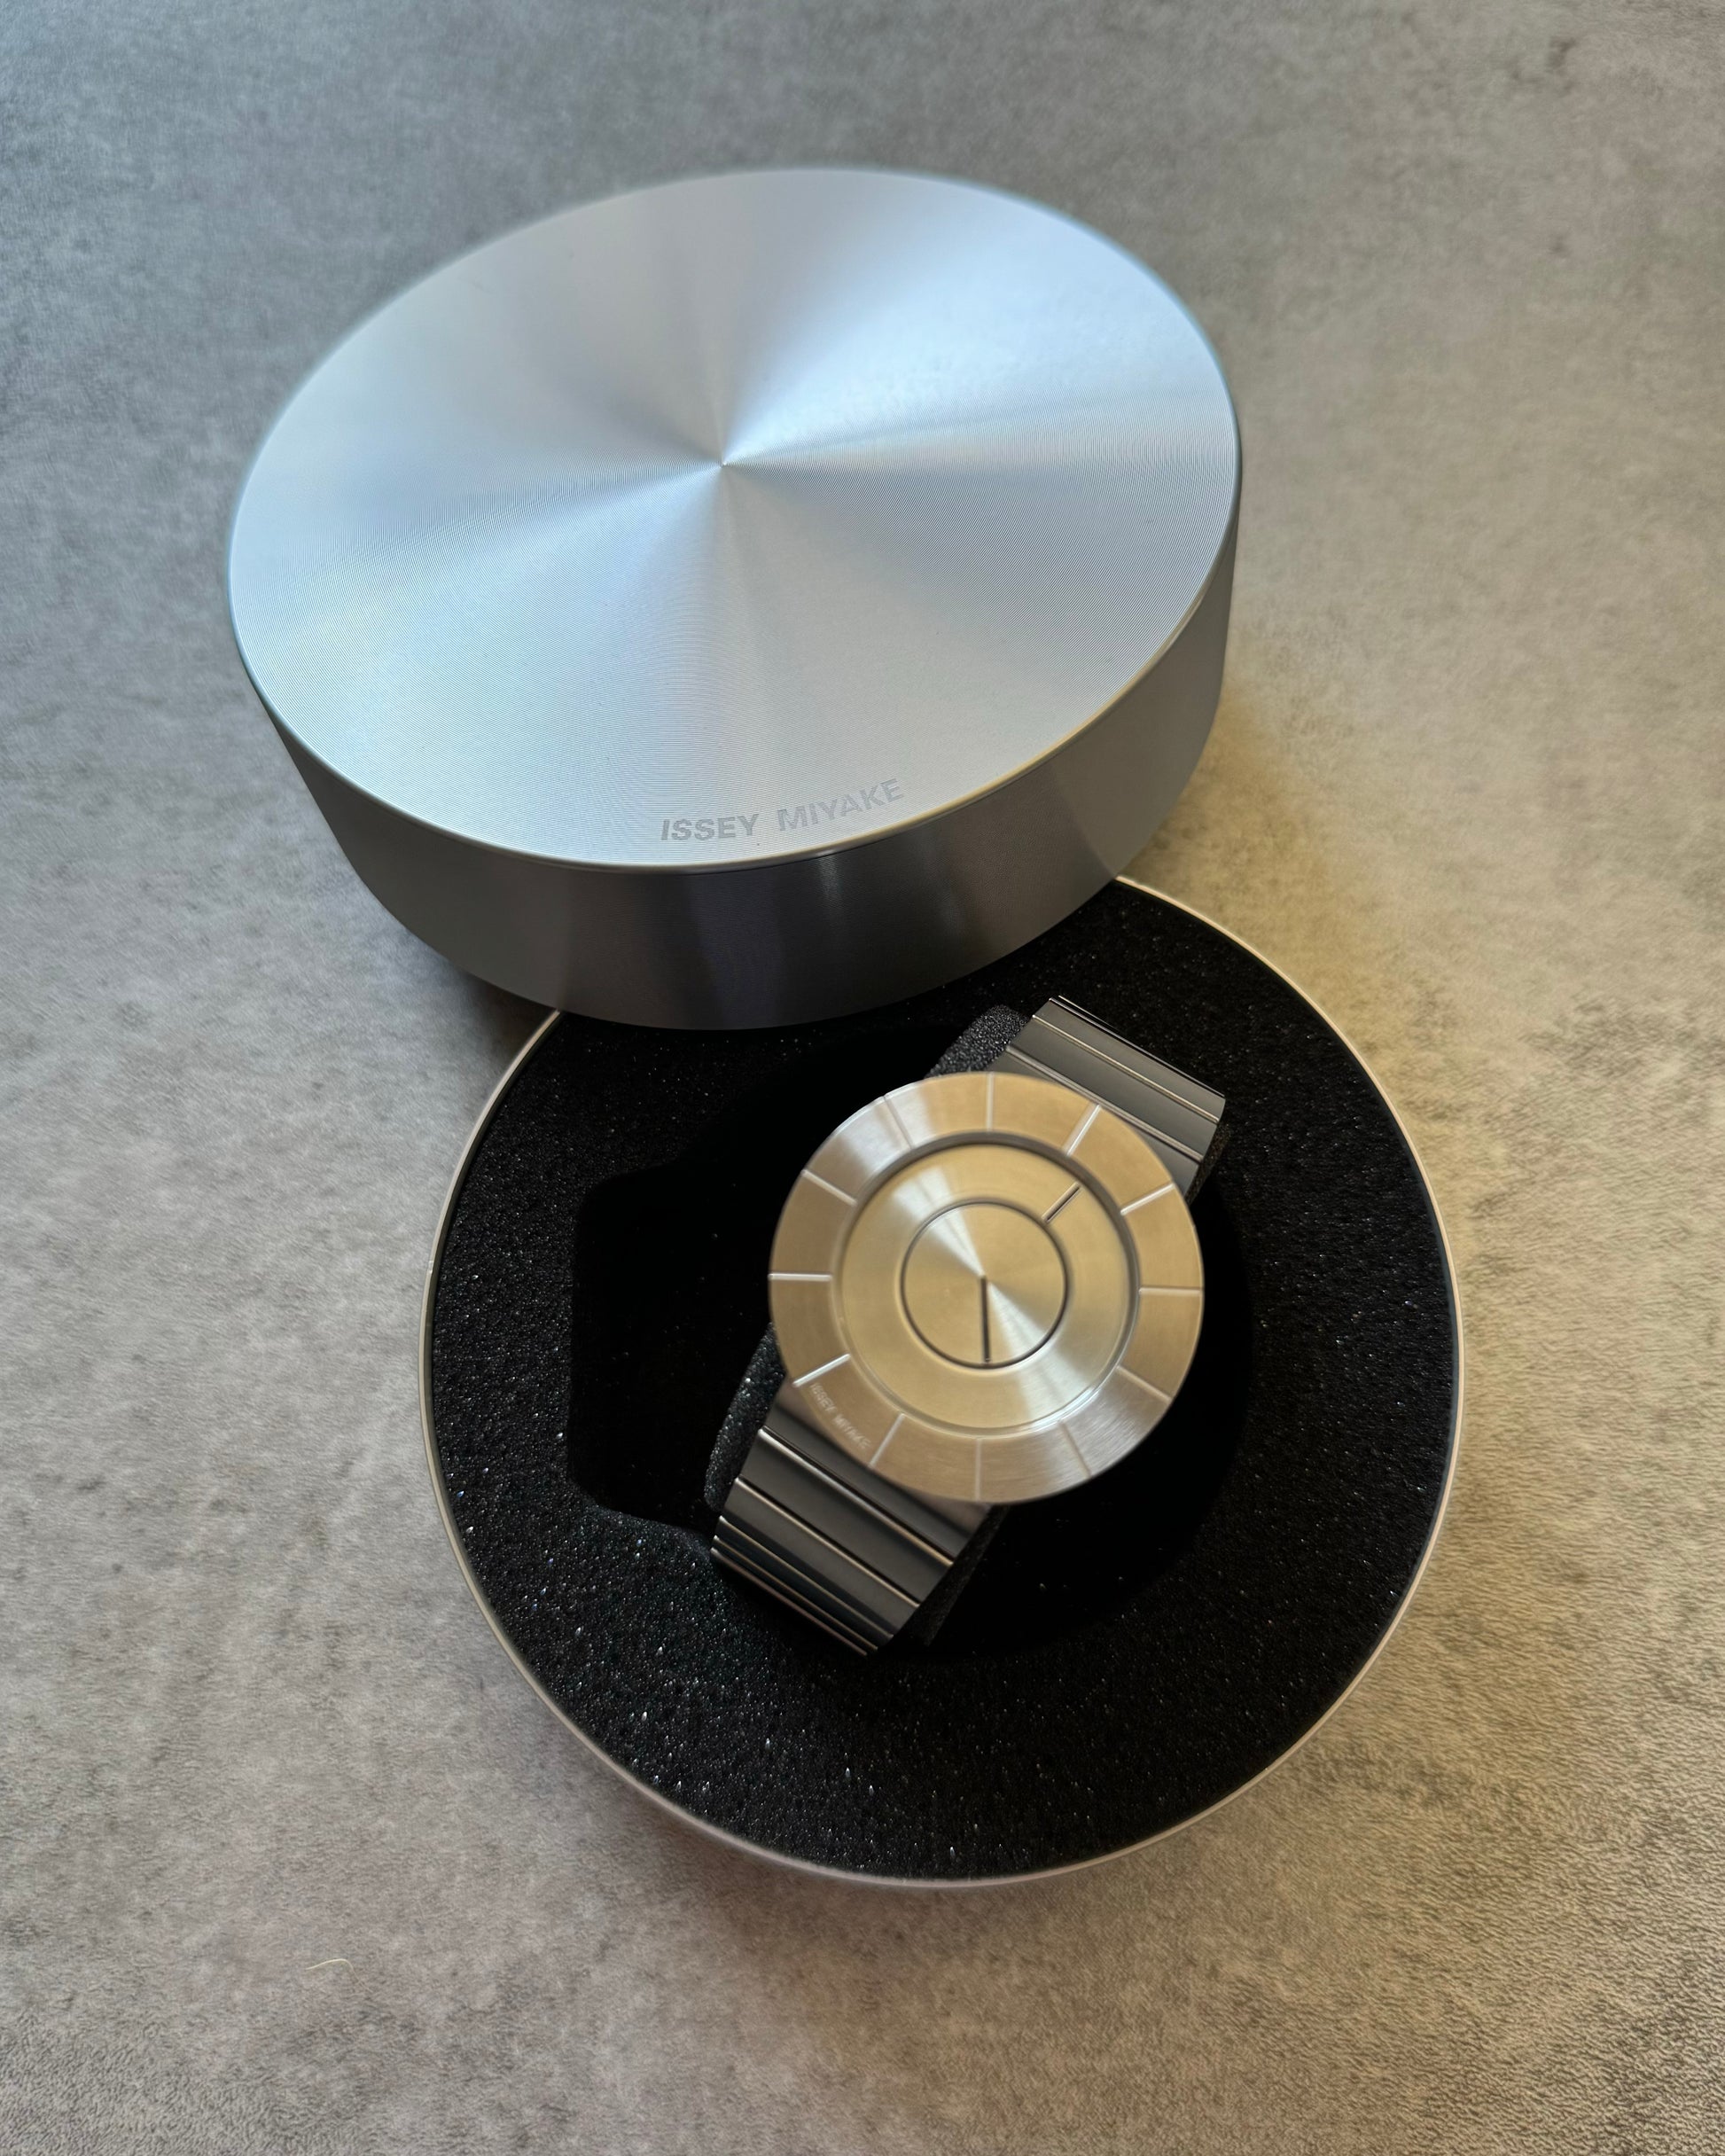 Issey Miyake TO Silver Watch Designed by Tokujin Yoshioka (OS) - 1